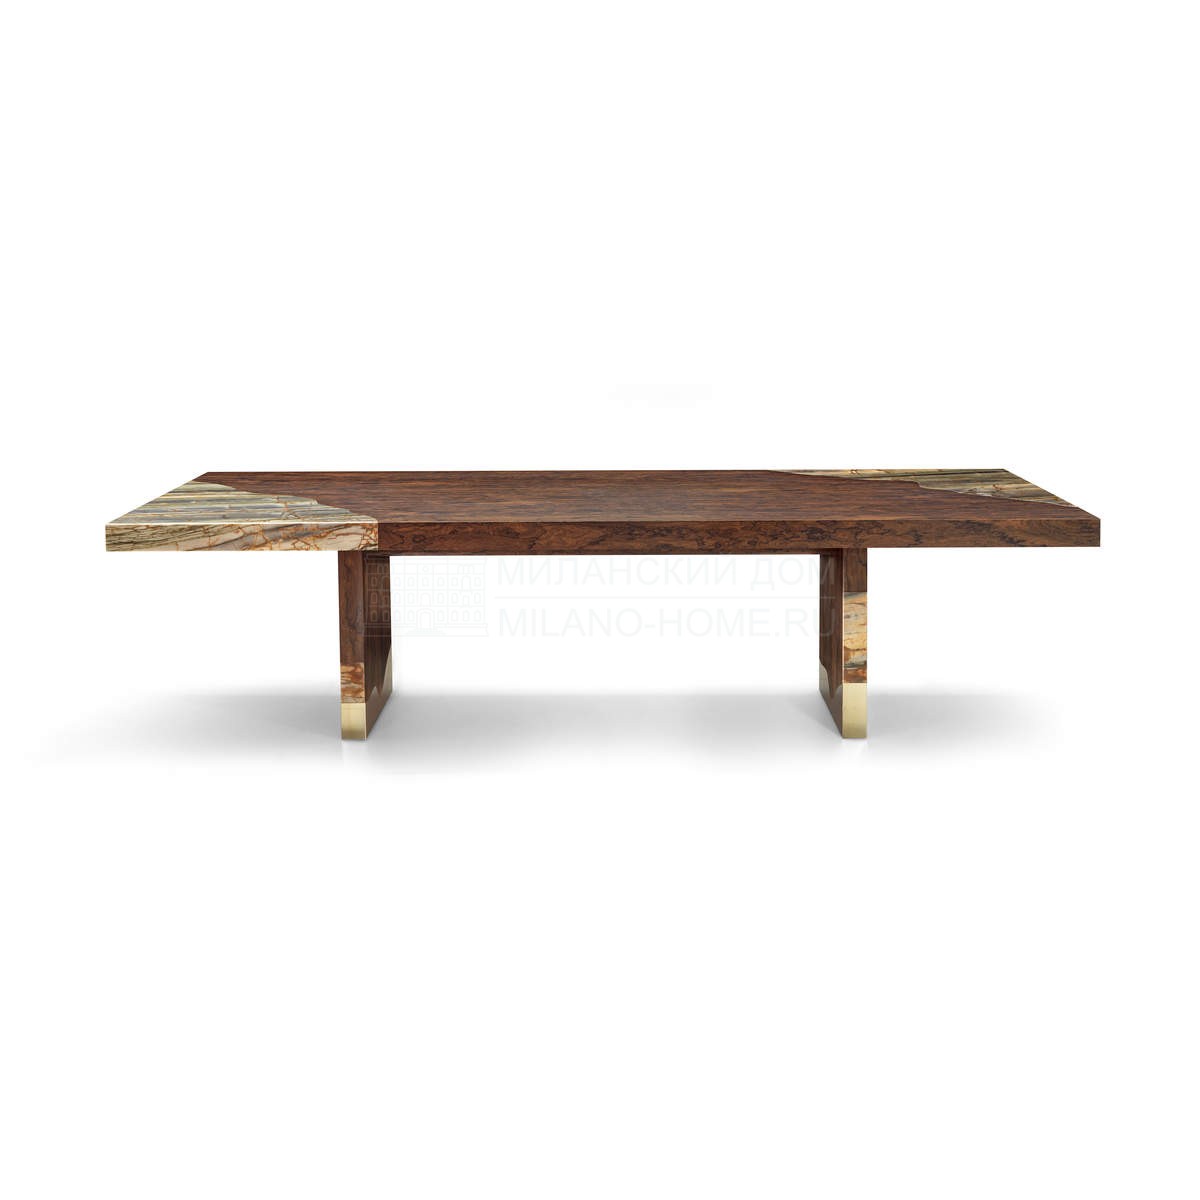 Обеденный стол Valiant dining table из Италии фабрики IPE CAVALLI VISIONNAIRE